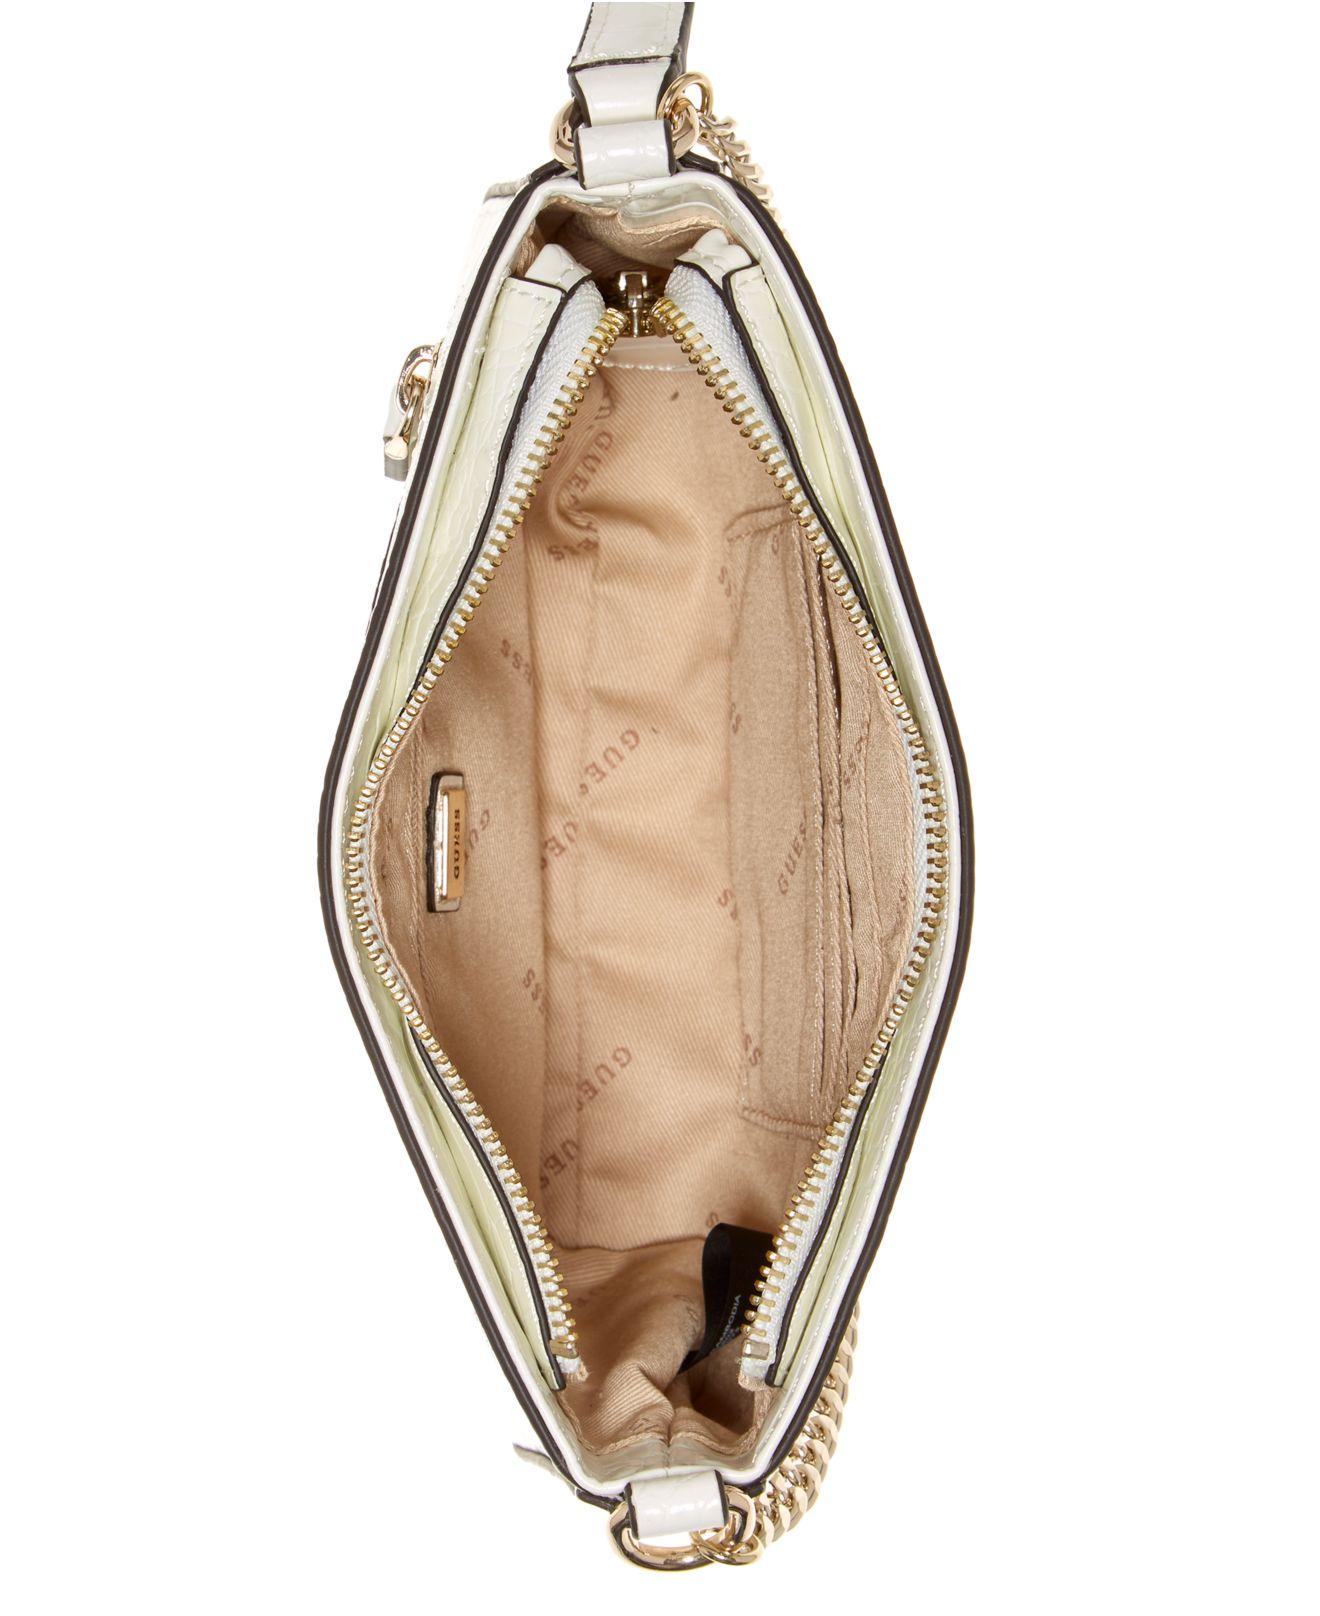 Guess Women's Katey Mini Satchel Bag, Brown/White, One Size price